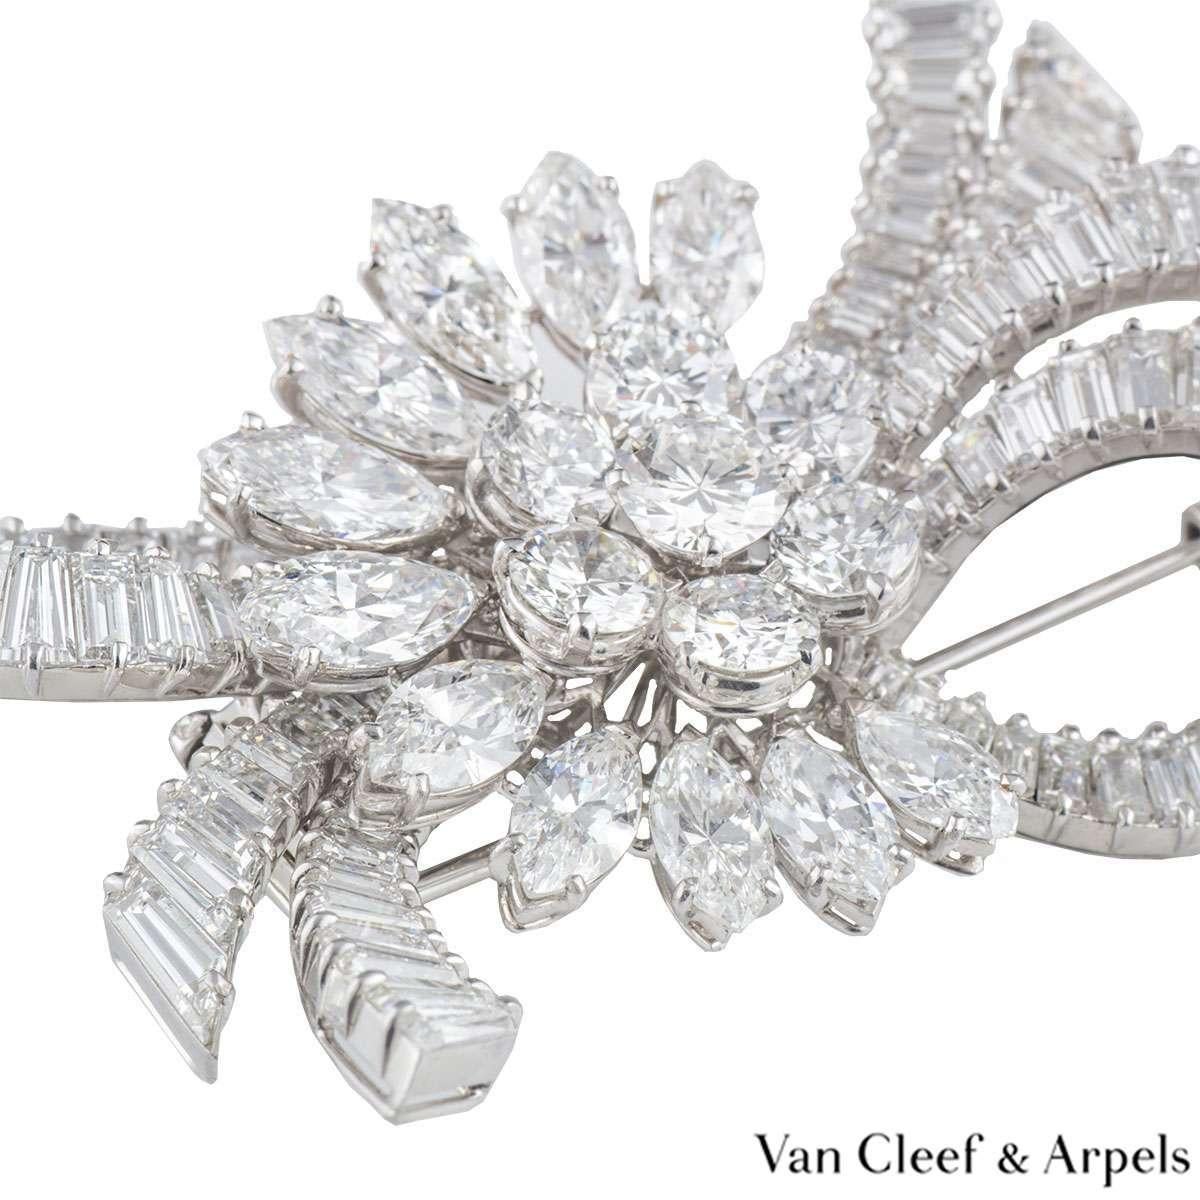 Van Cleef & Arpels Vintage 1950s Diamond Platinum Brooch 14 Carat For Sale 3